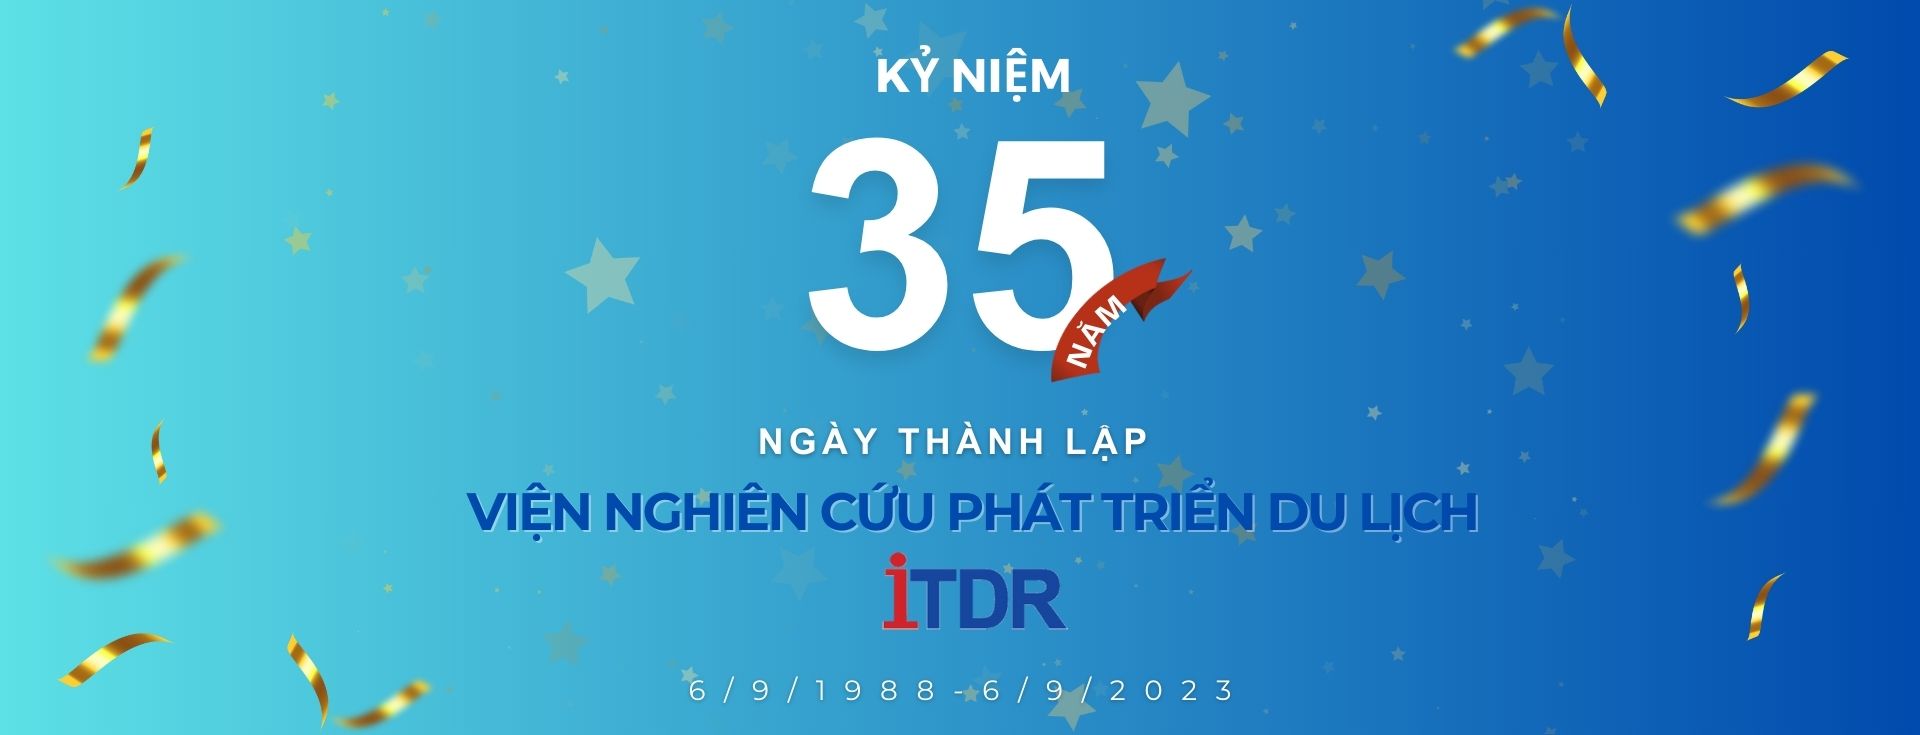 35 Ky Niem Thanh Lap Vien   Ver 2 (1920 × 735 Px)